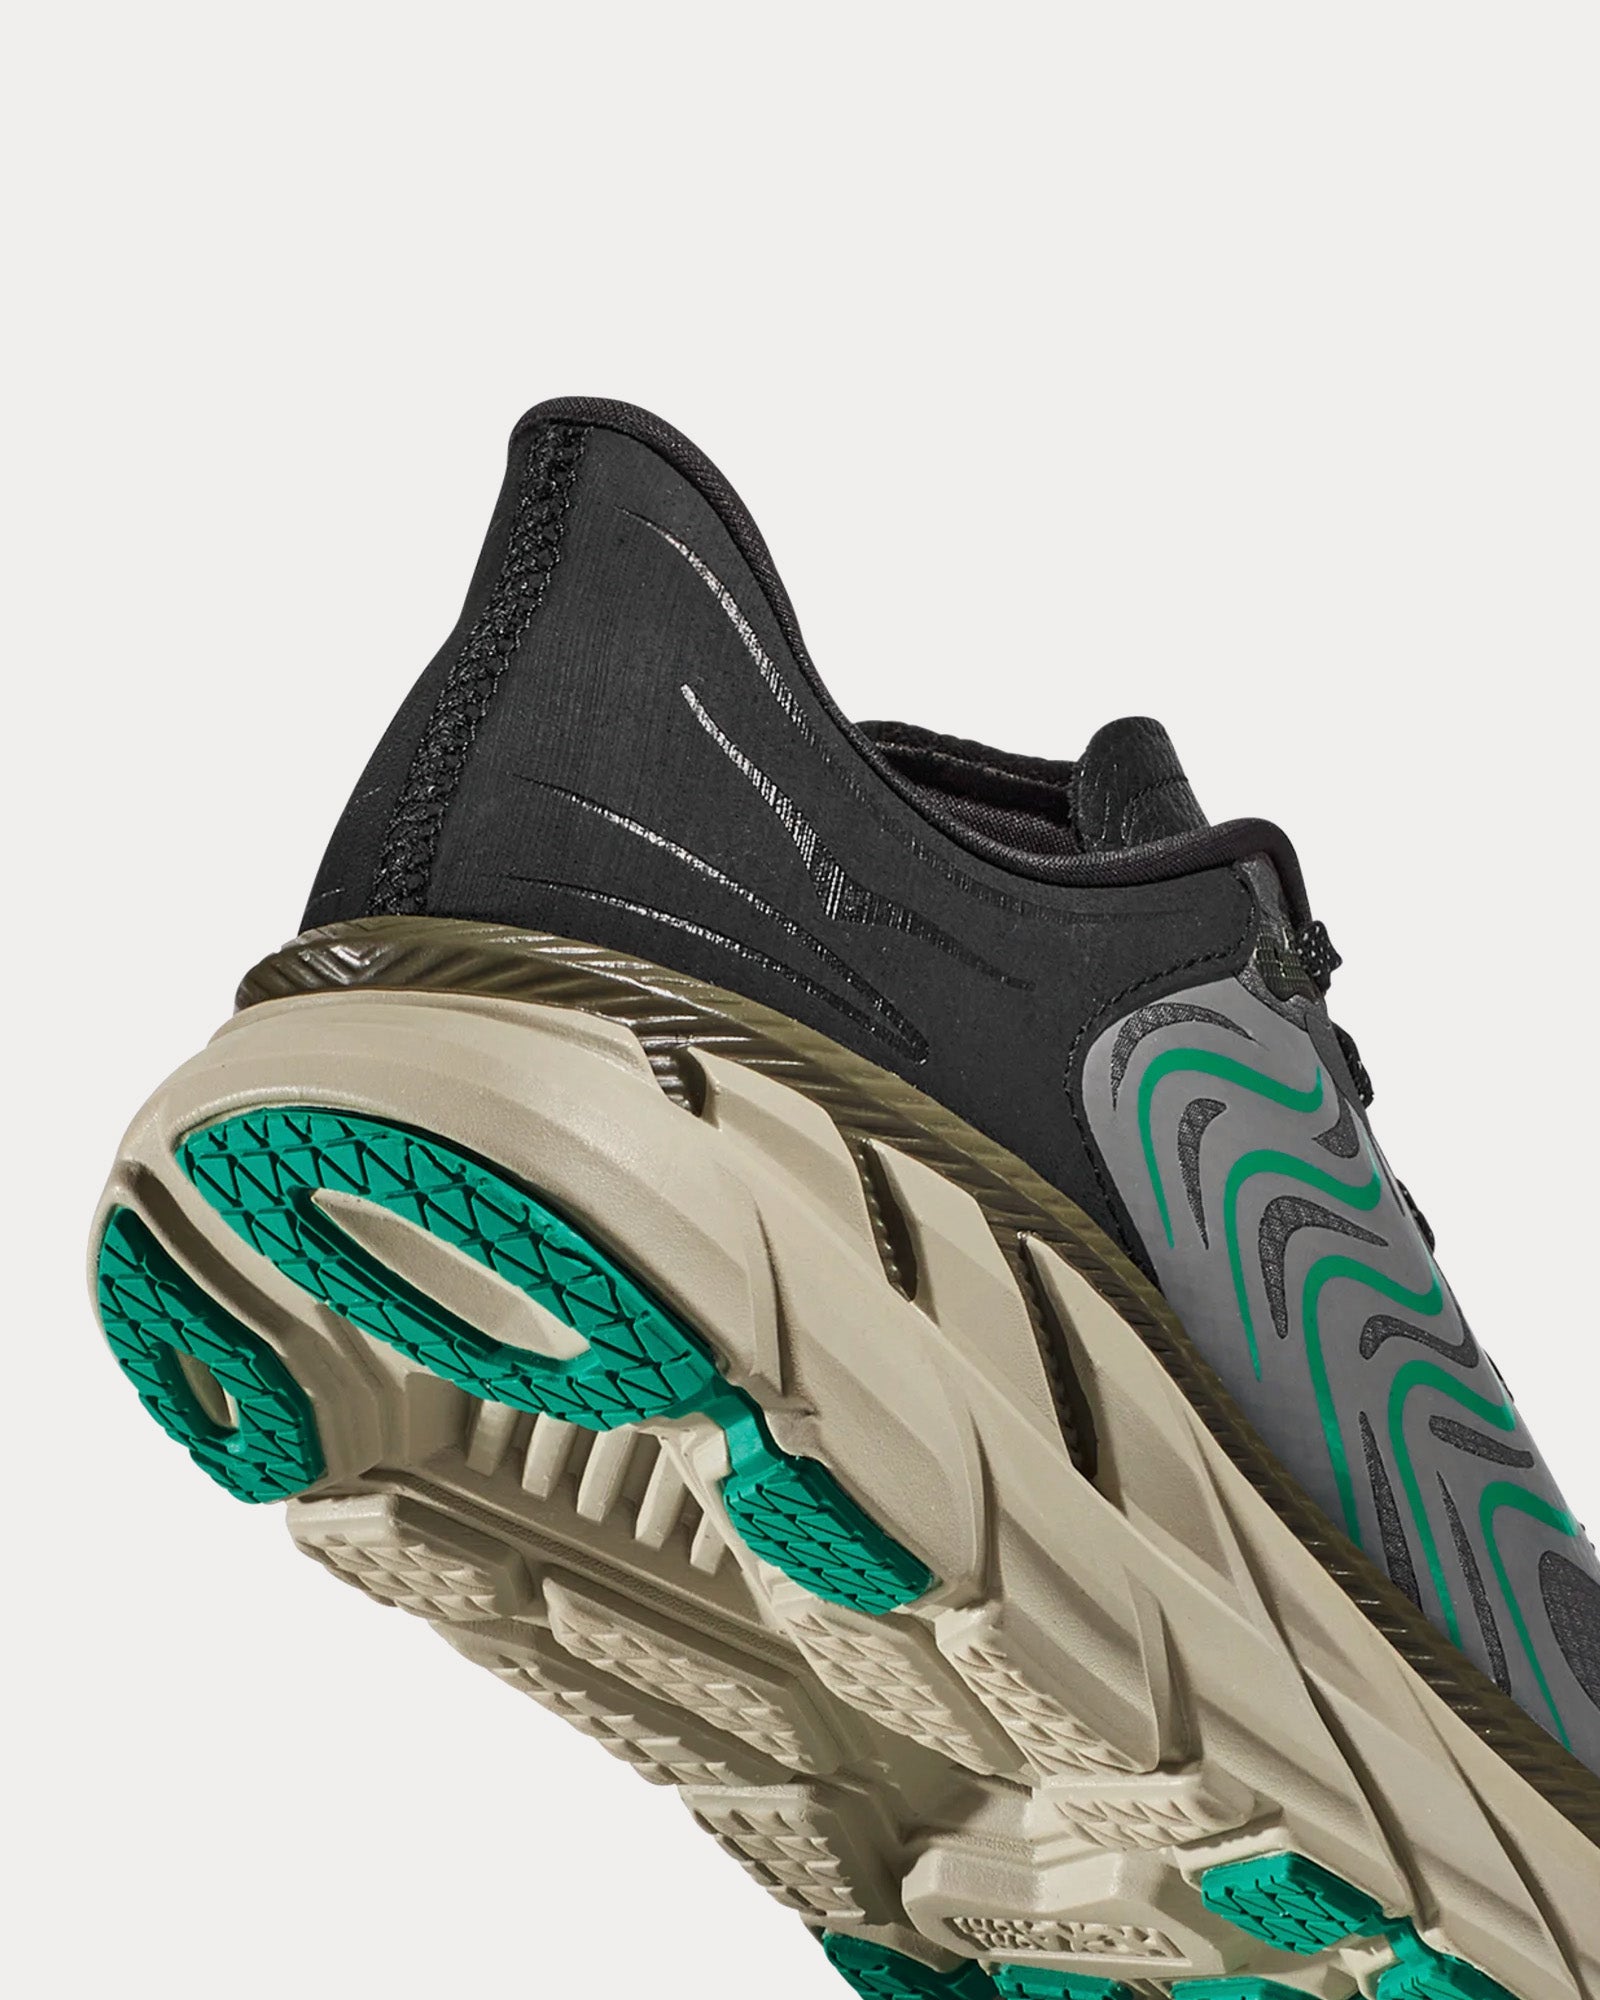 Hoka - Stealth/Tech Clifton LS Castlerock / Barley Running Shoes